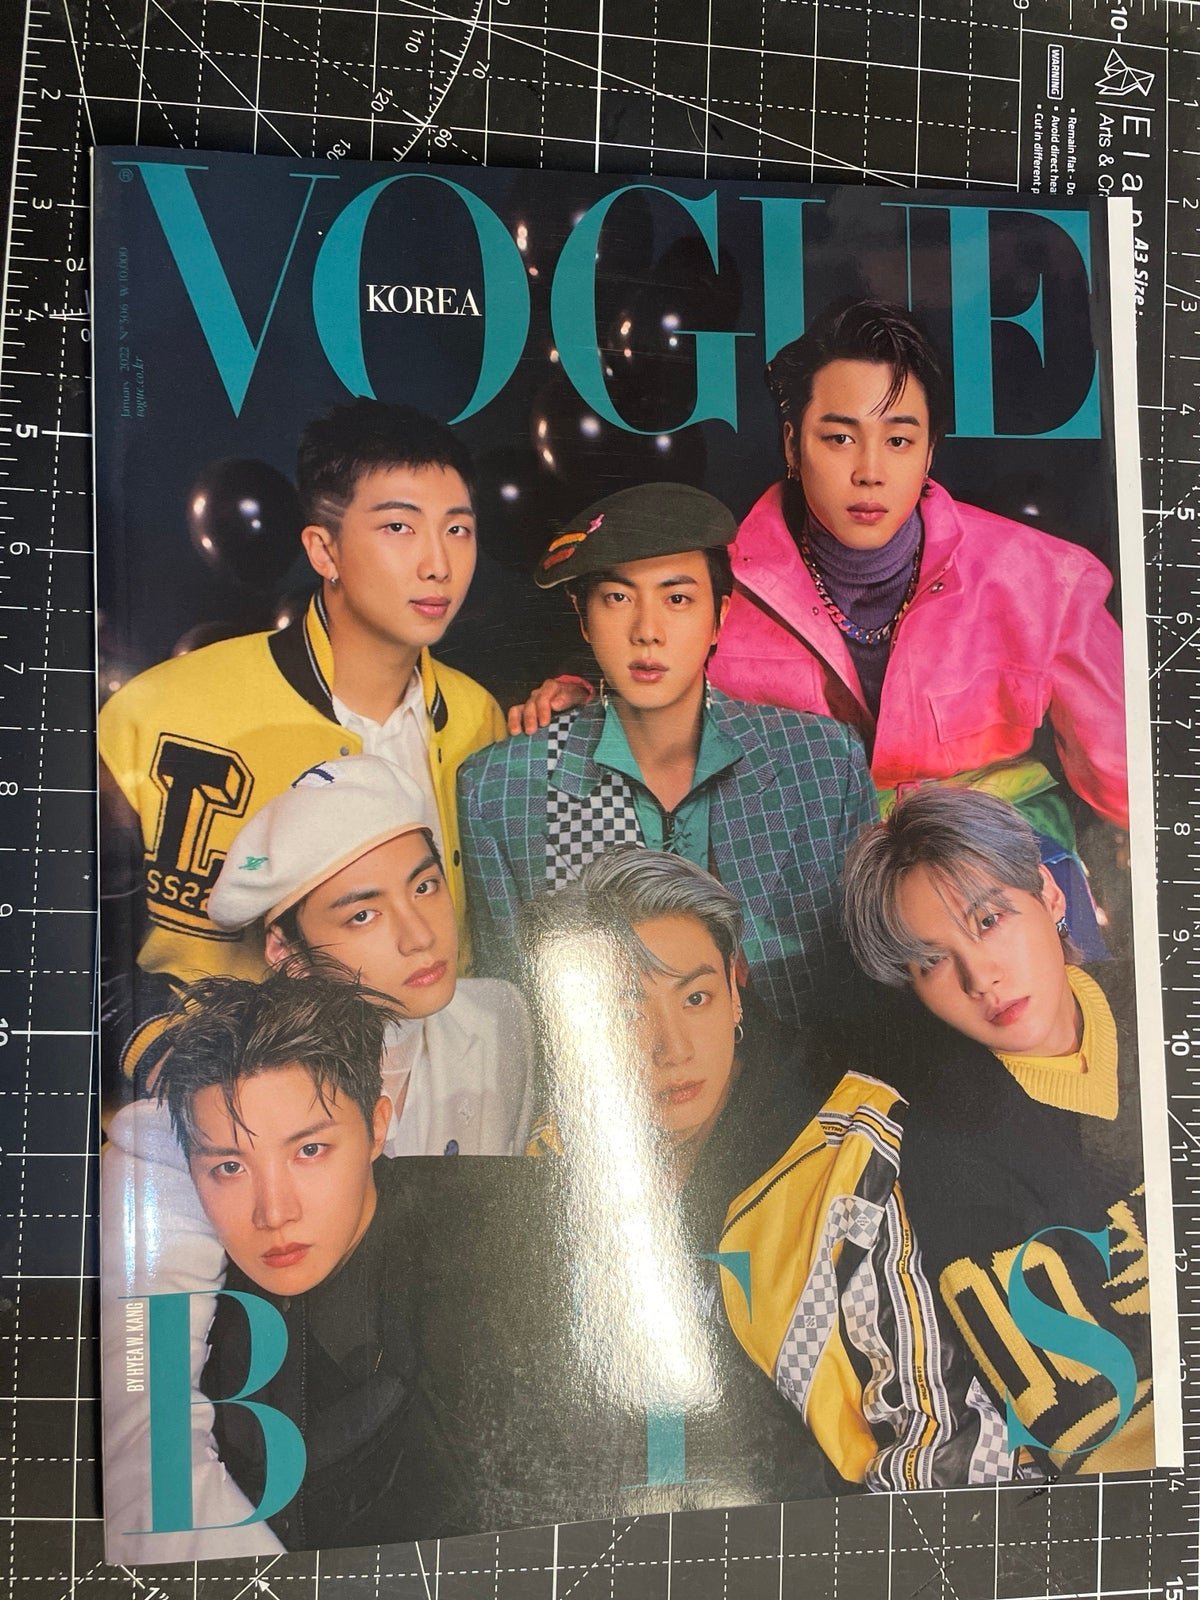 vogue korea magazine bts cover 8AlvdQ8vM